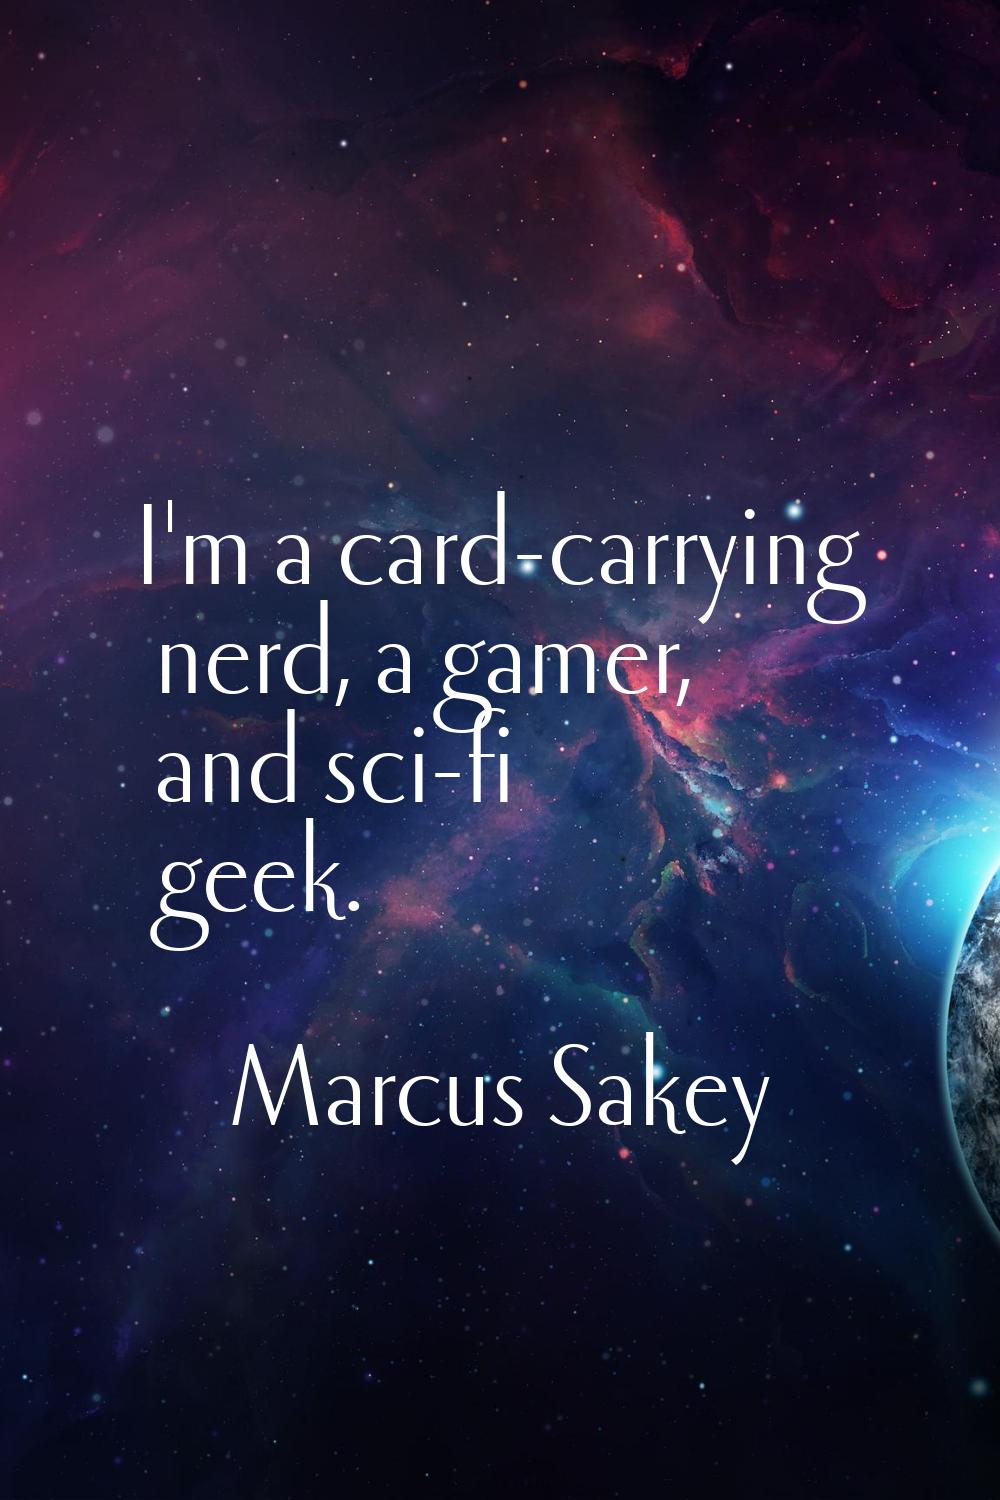 I'm a card-carrying nerd, a gamer, and sci-fi geek.